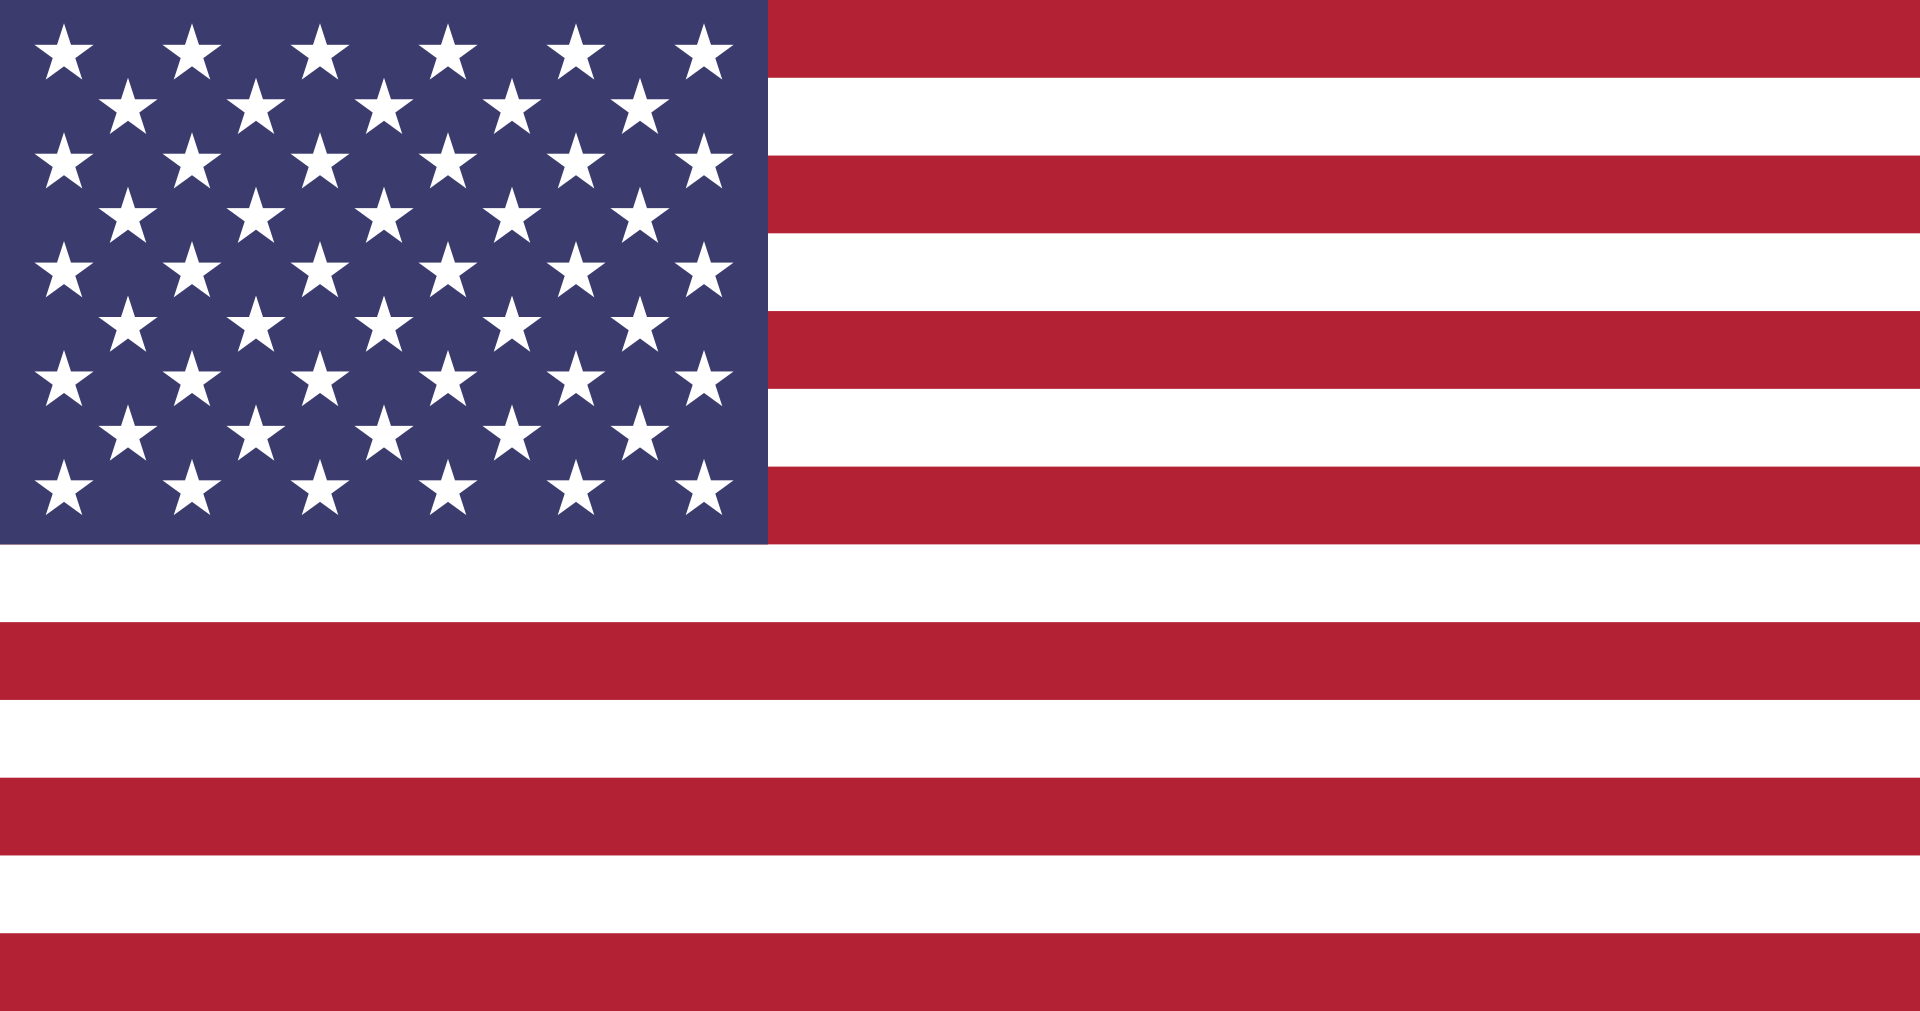 American flag / United States of America / USA / US flag